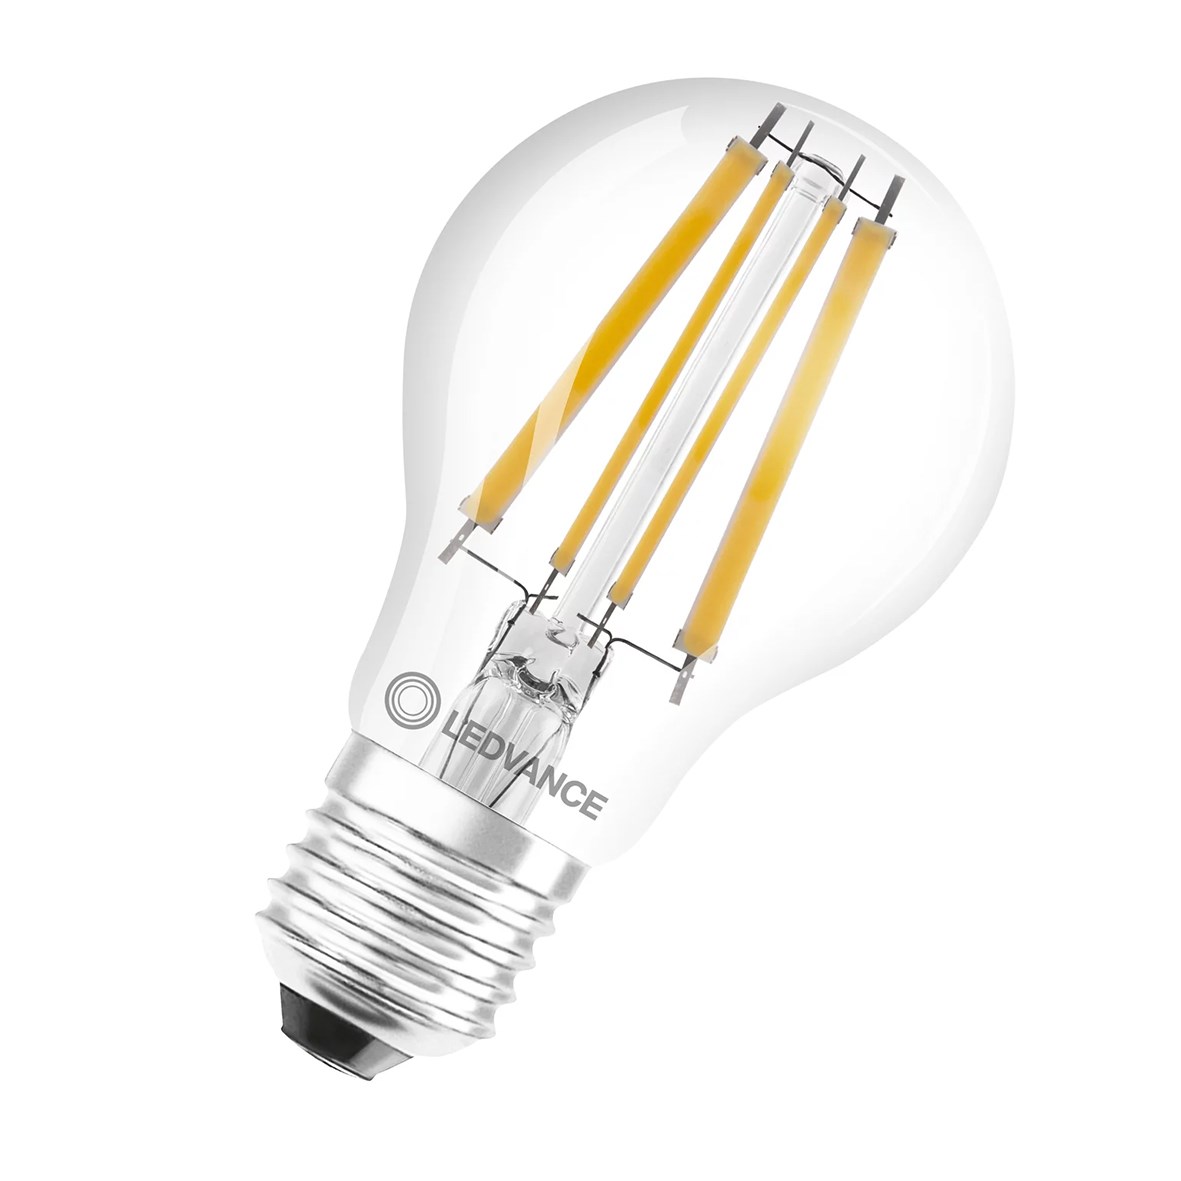 Bild von LED Filament Glühlampe A100 / 1.521lm / 11W / E27 / 220-240V / 320° / 2.700K / 827 ww klar / dimmbar